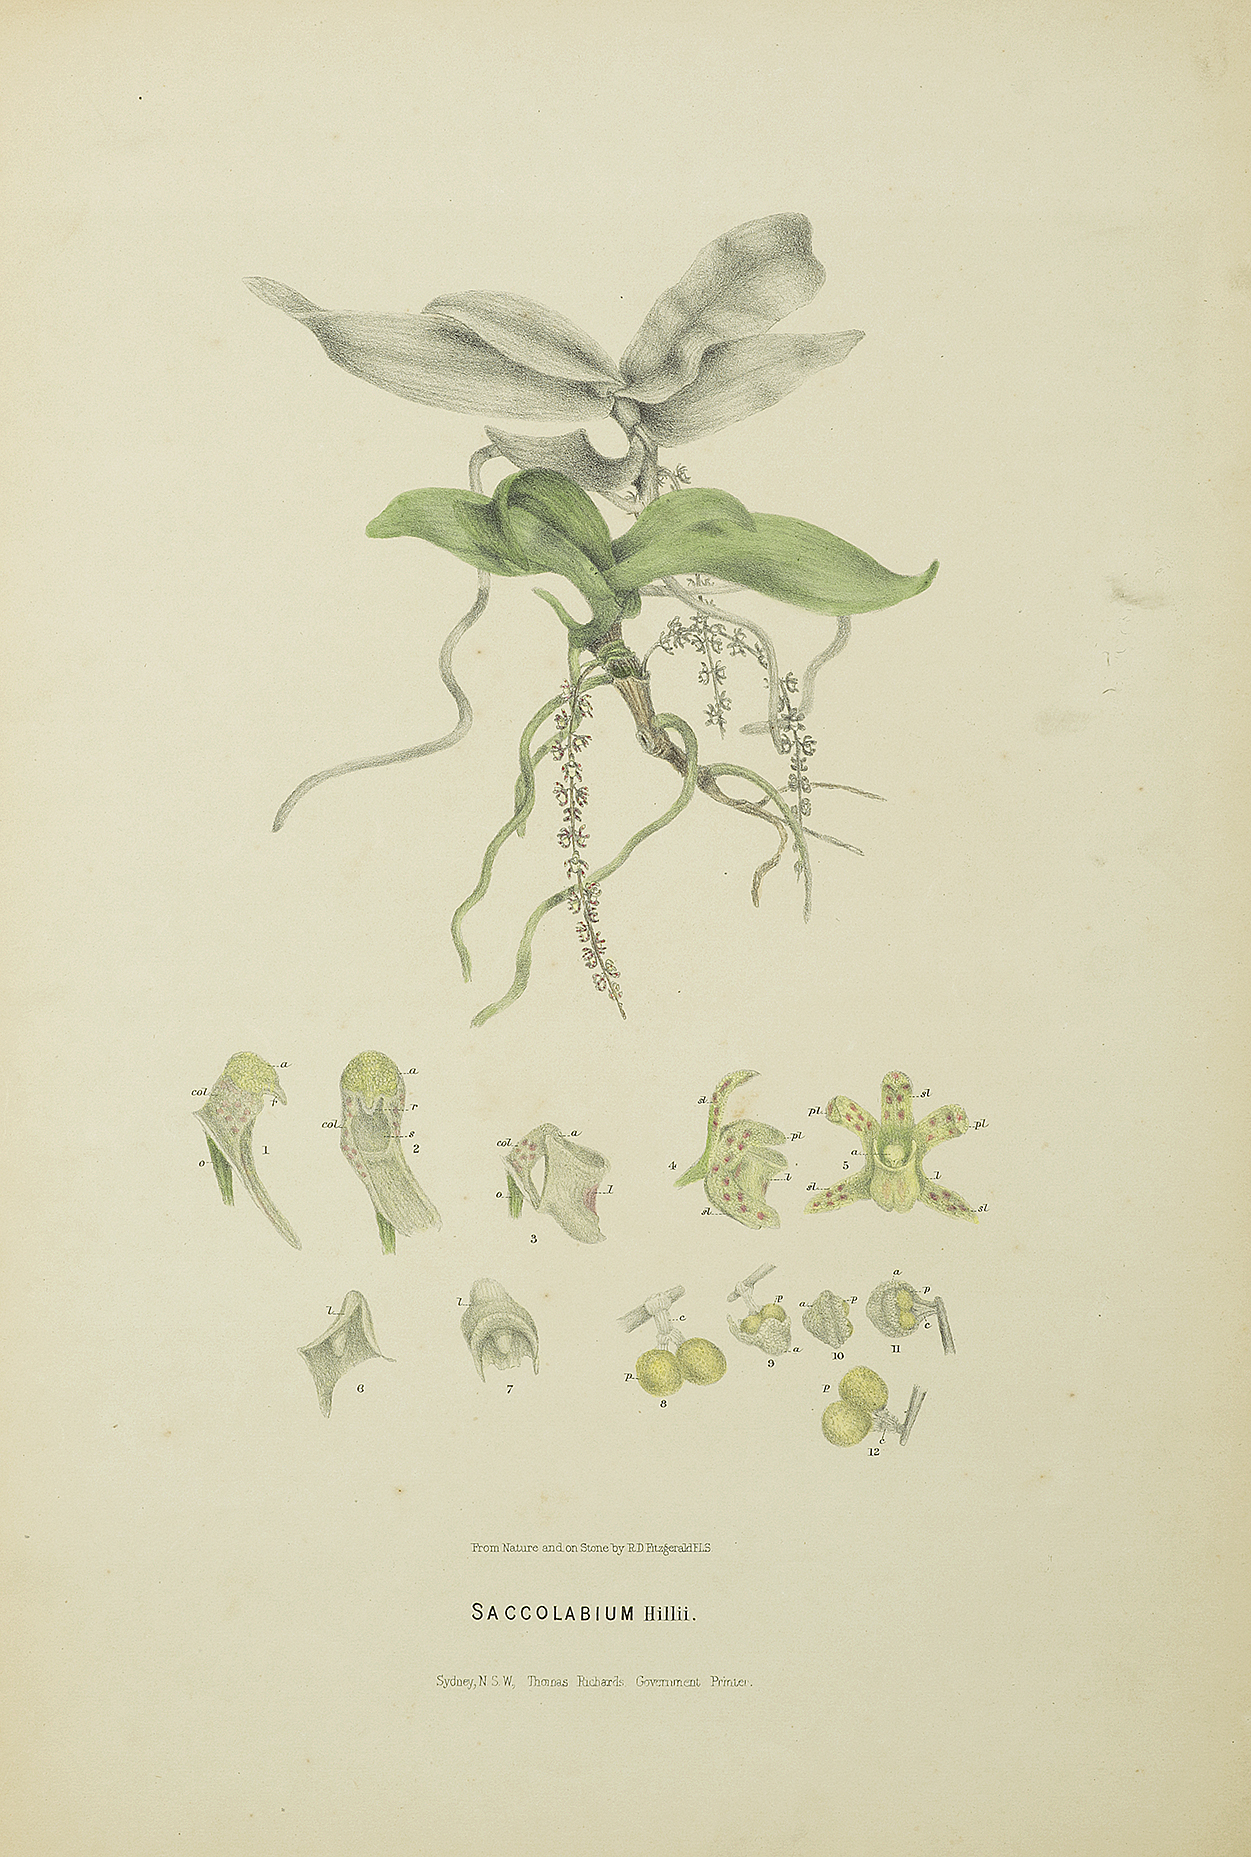 Saccolabium Hillii [Now Peristeranthus hillii] [Beetle Orchid] - Antique Print from 1876